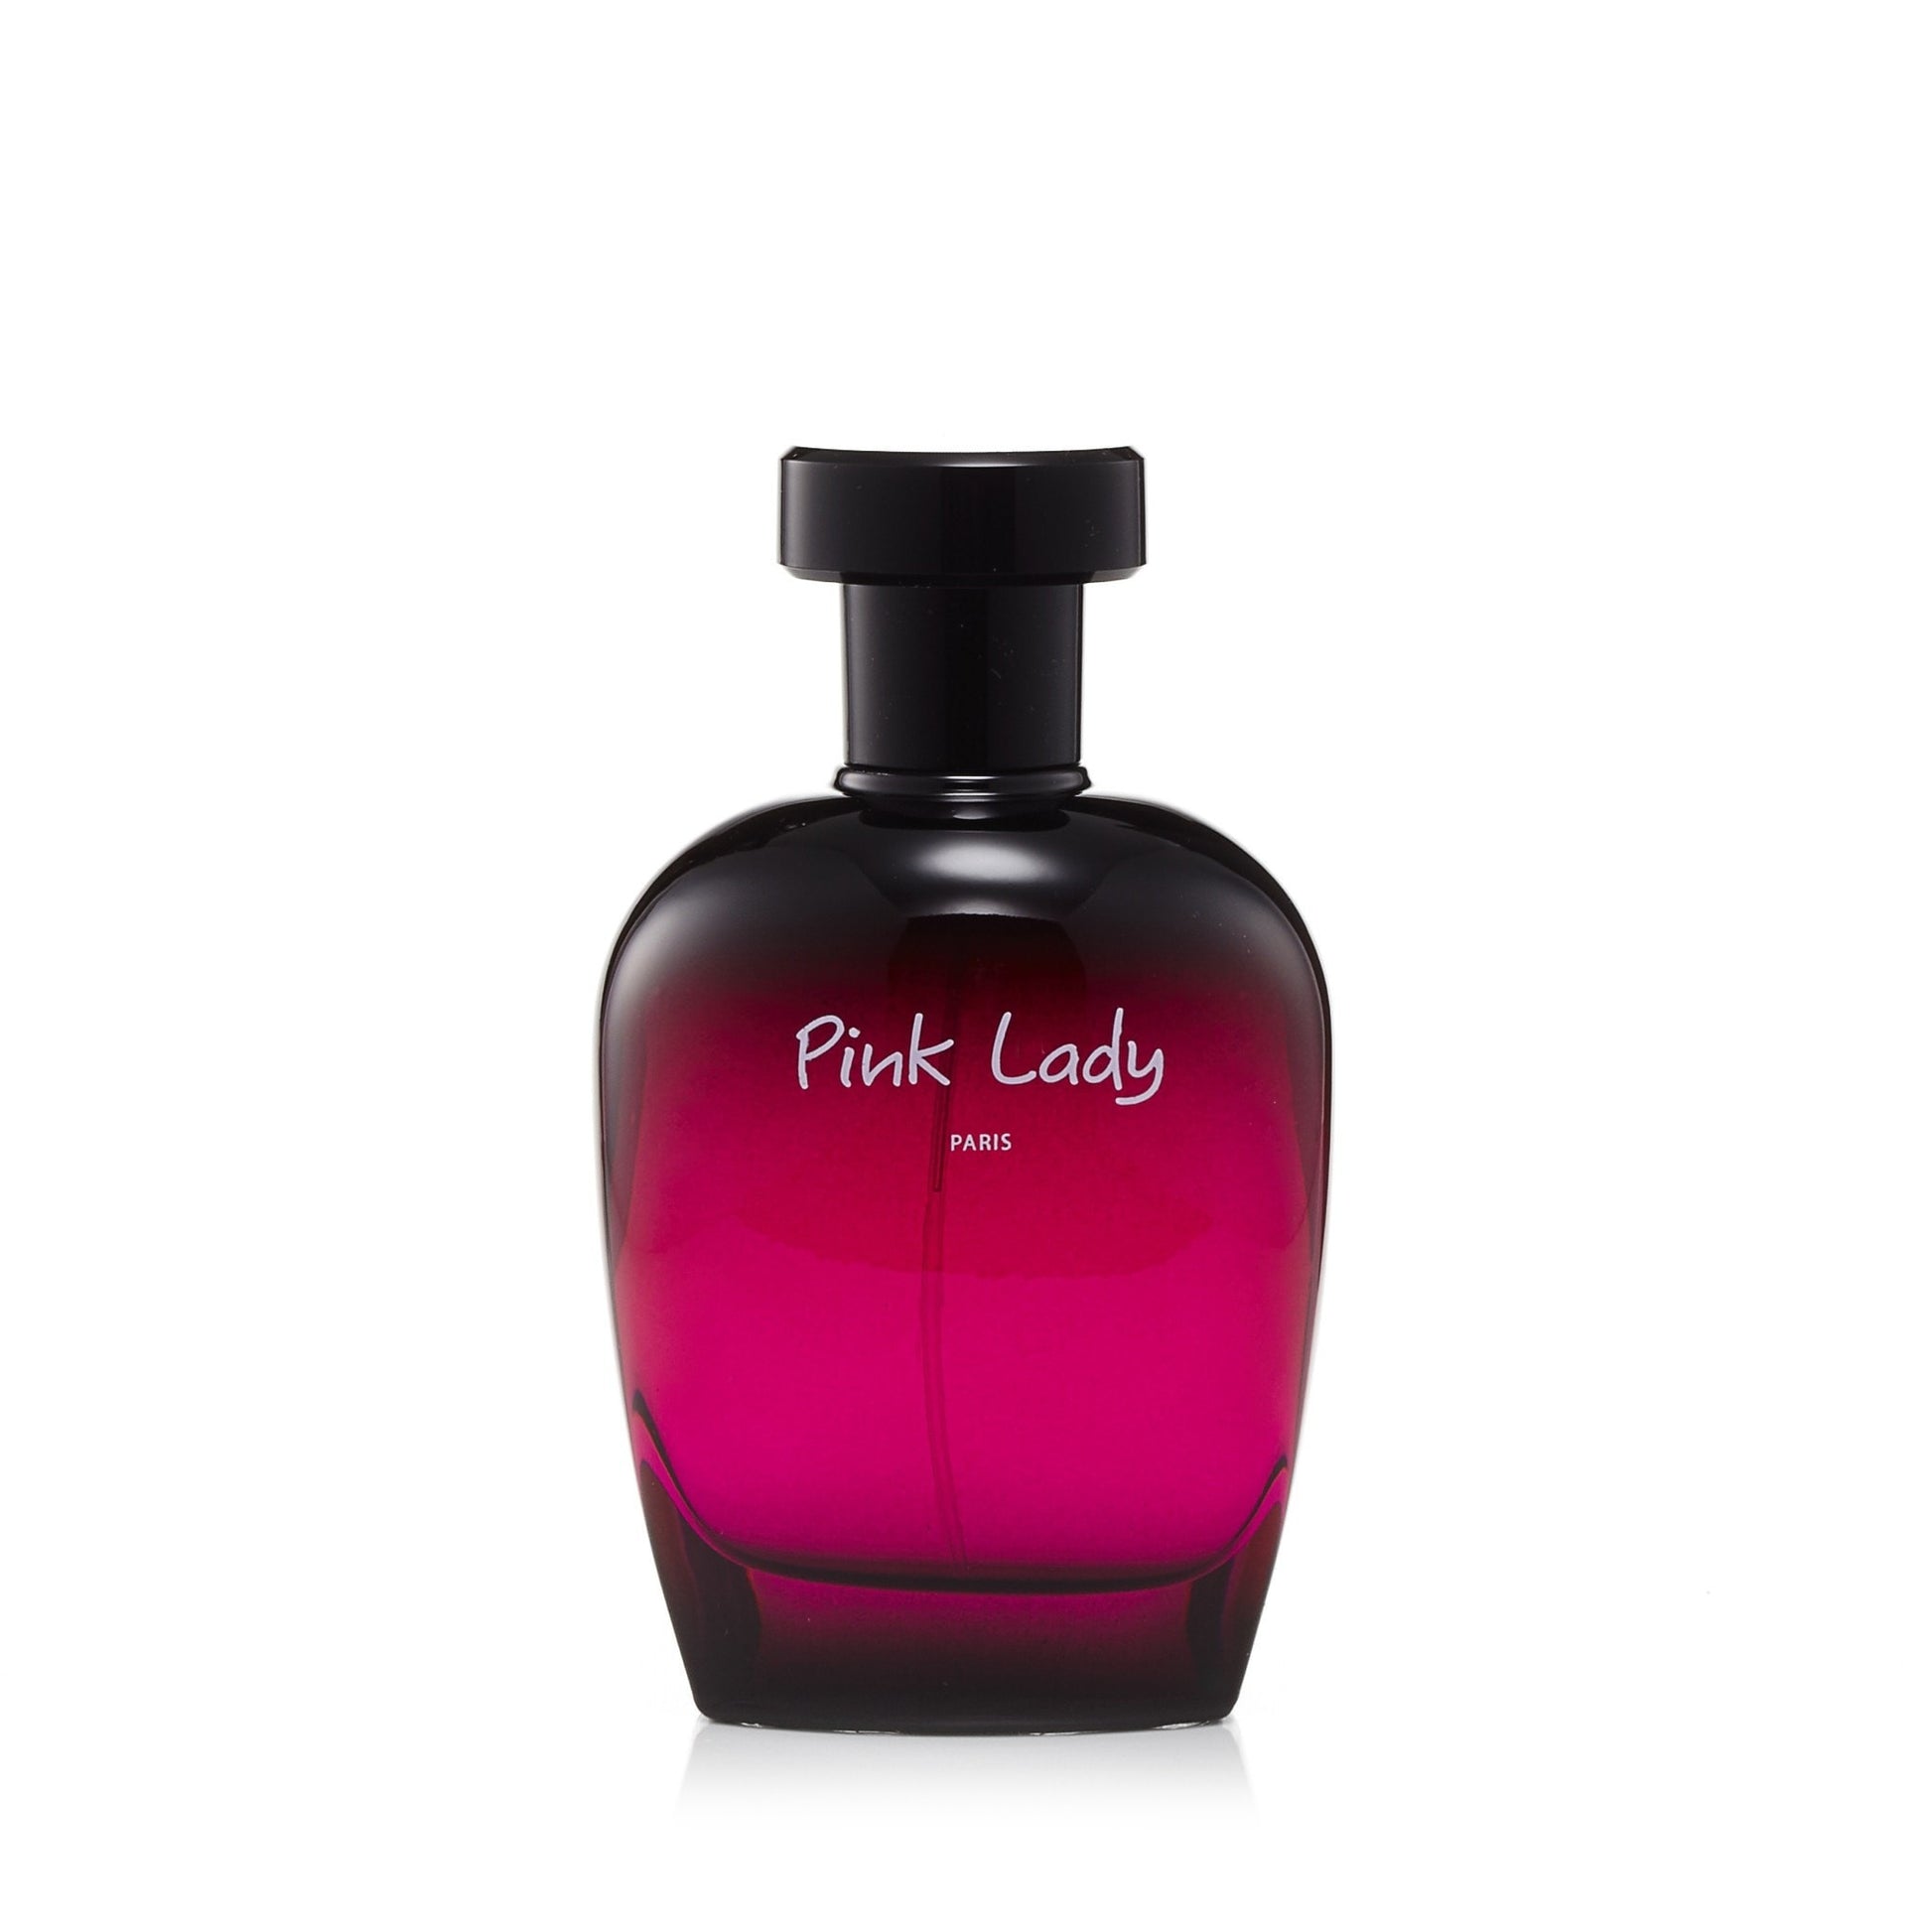 Pink Lady Eau de Parfum Womens Spray 3.4 oz. Click to open in modal